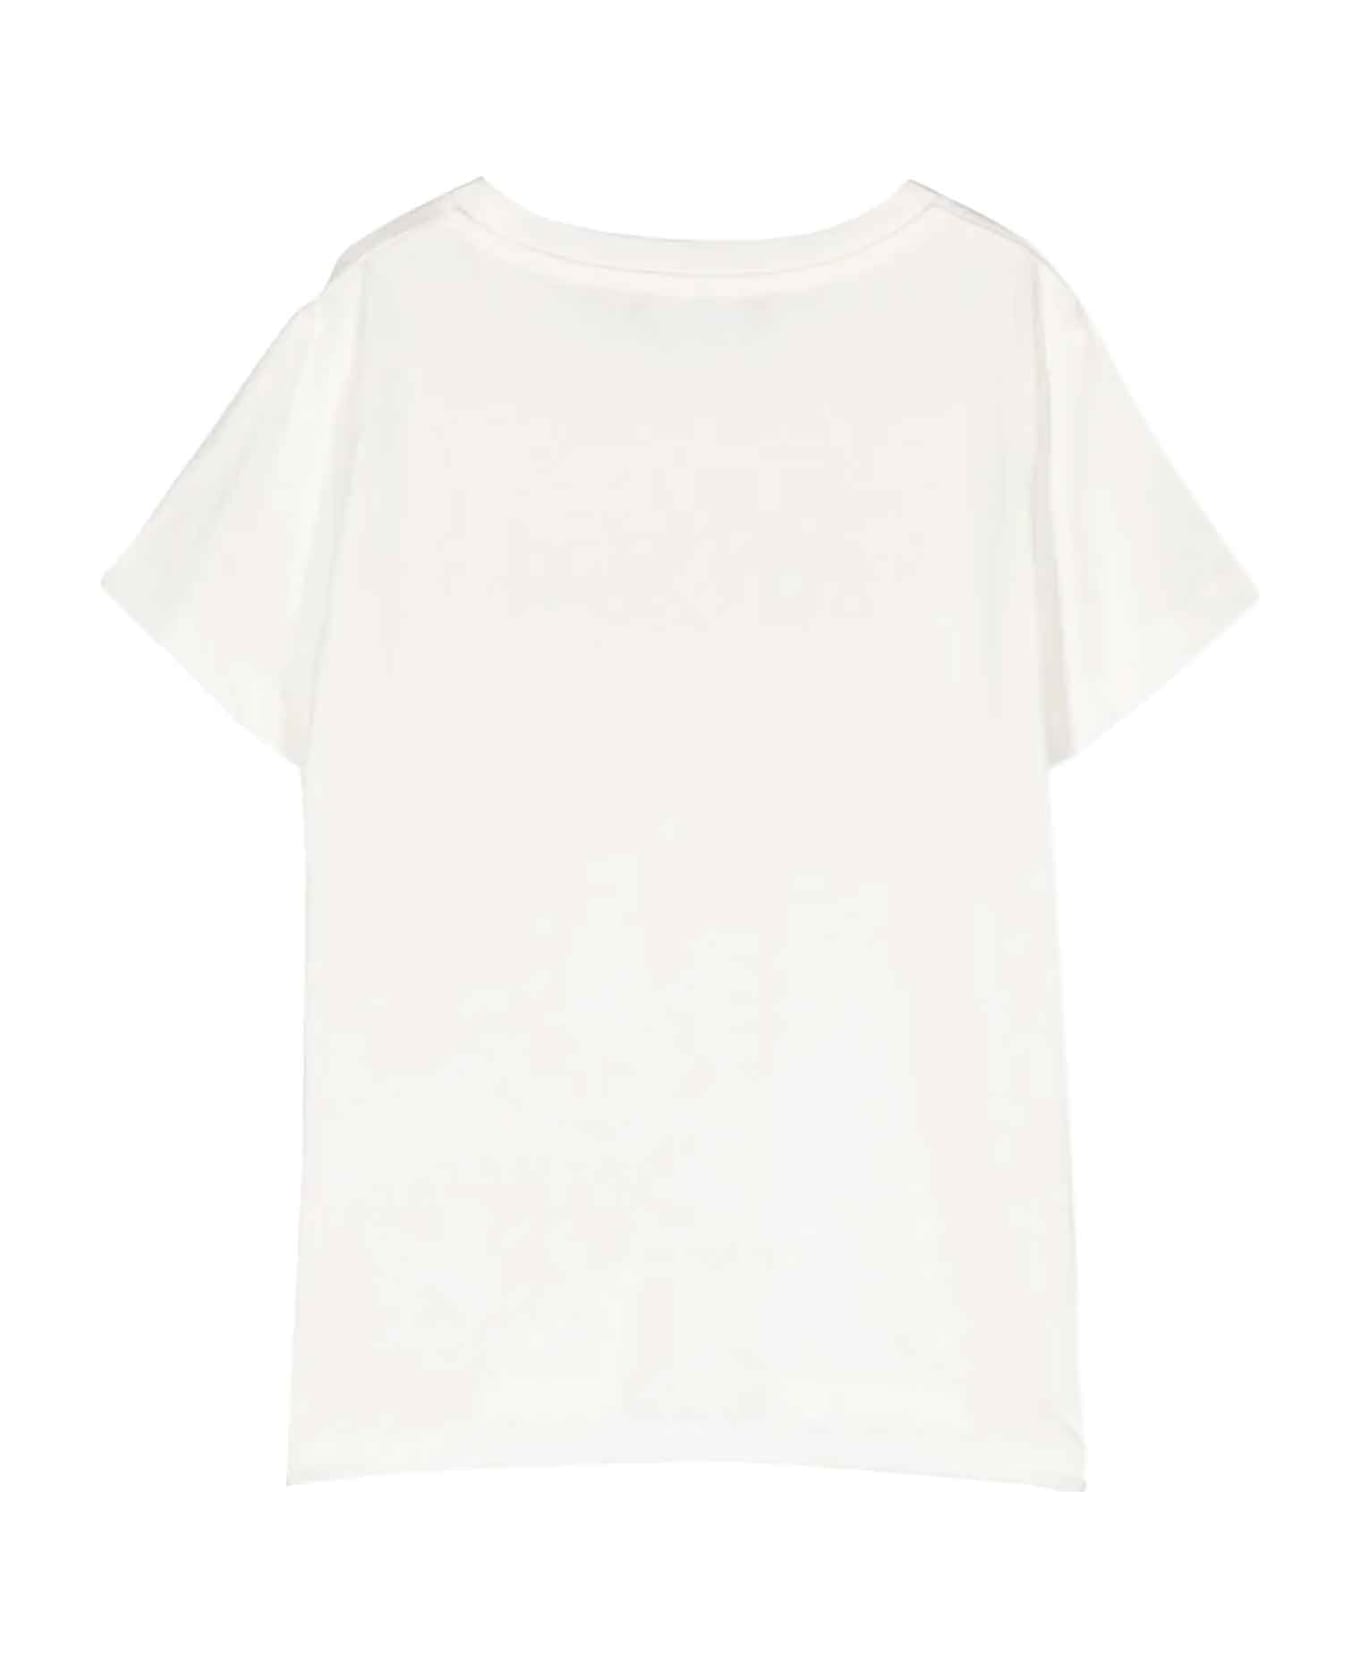 Young Versace White T-shirt Unisex Kids - Bianco